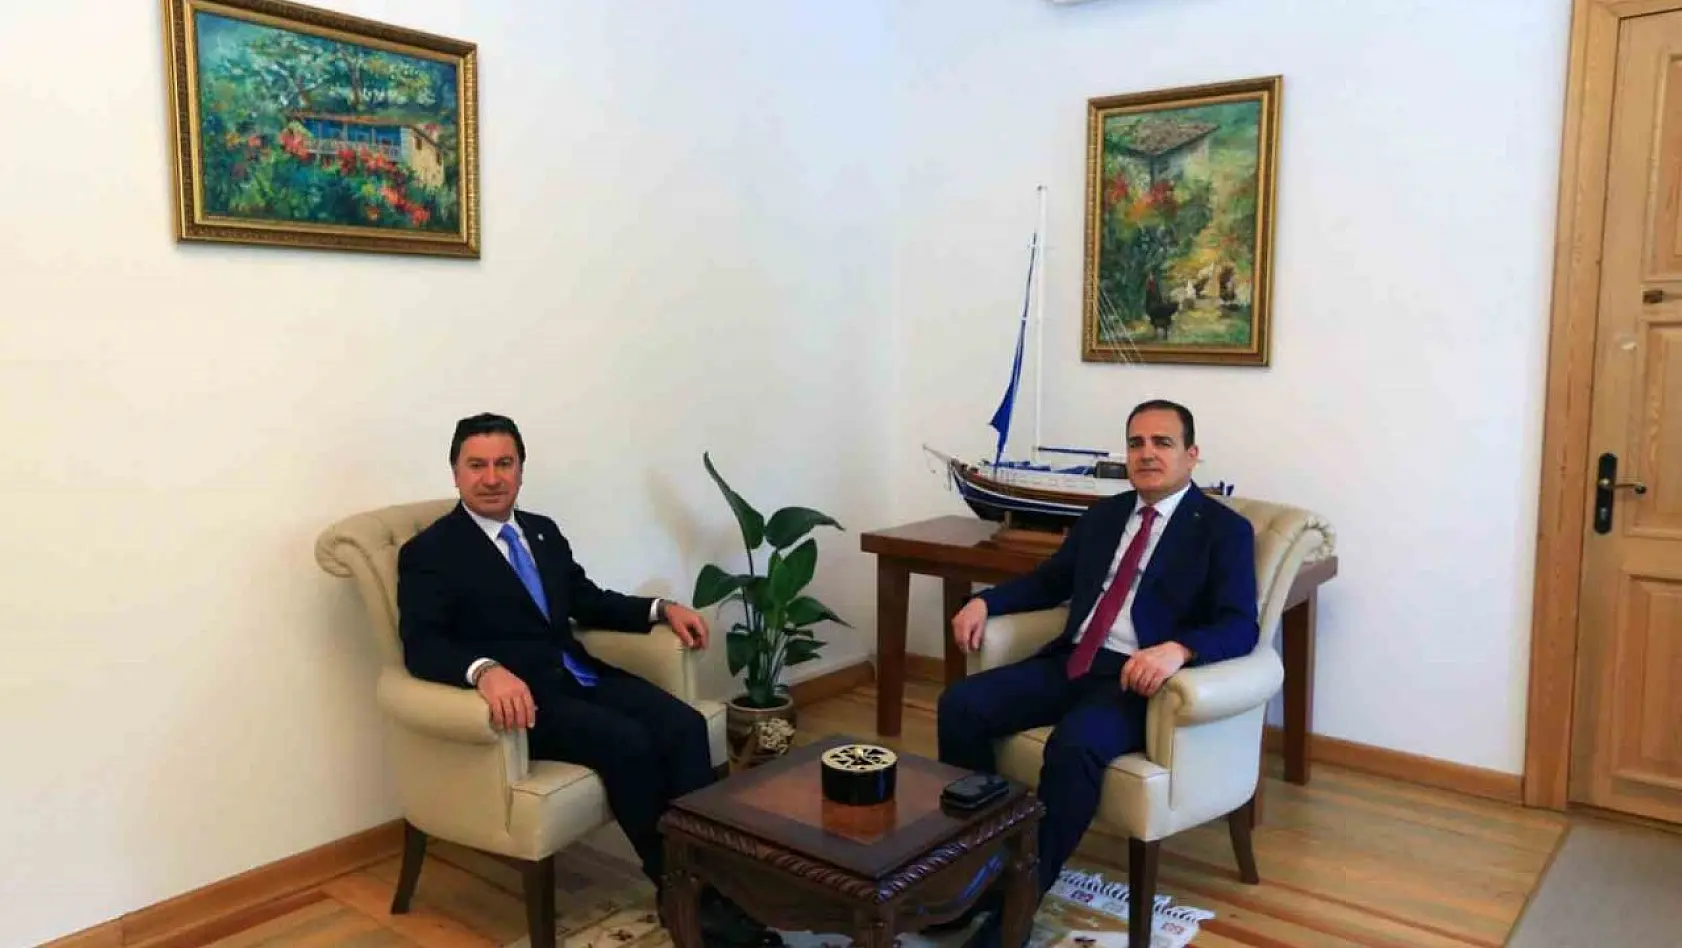 Muğla Valisi Akbıyık'tan Başkan Aras'a 'Hayırlı olsun' ziyareti